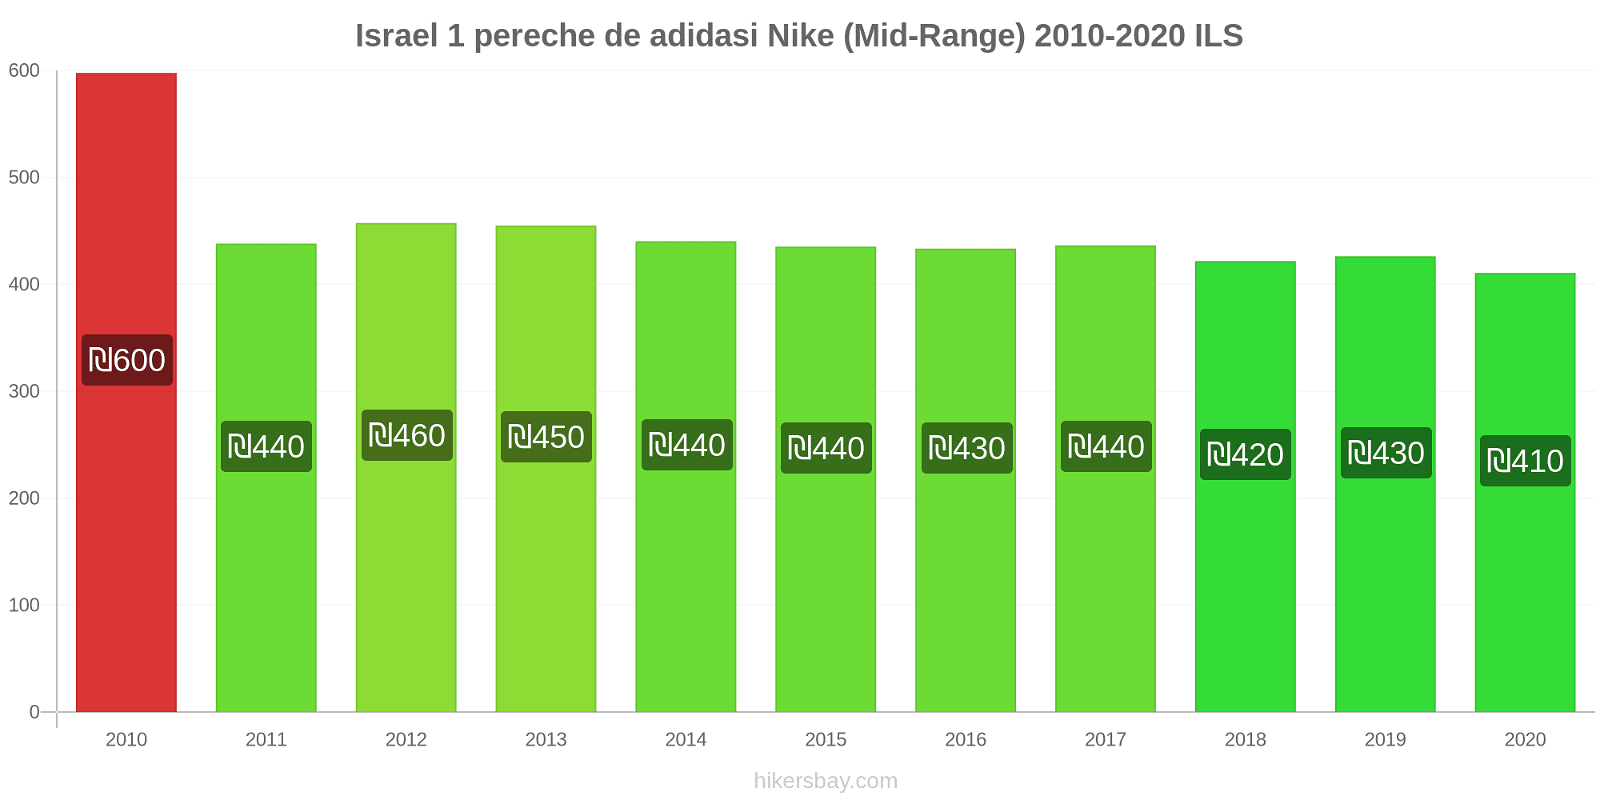 Israel modificări de preț 1 pereche de adidasi Nike (Mid-Range) hikersbay.com